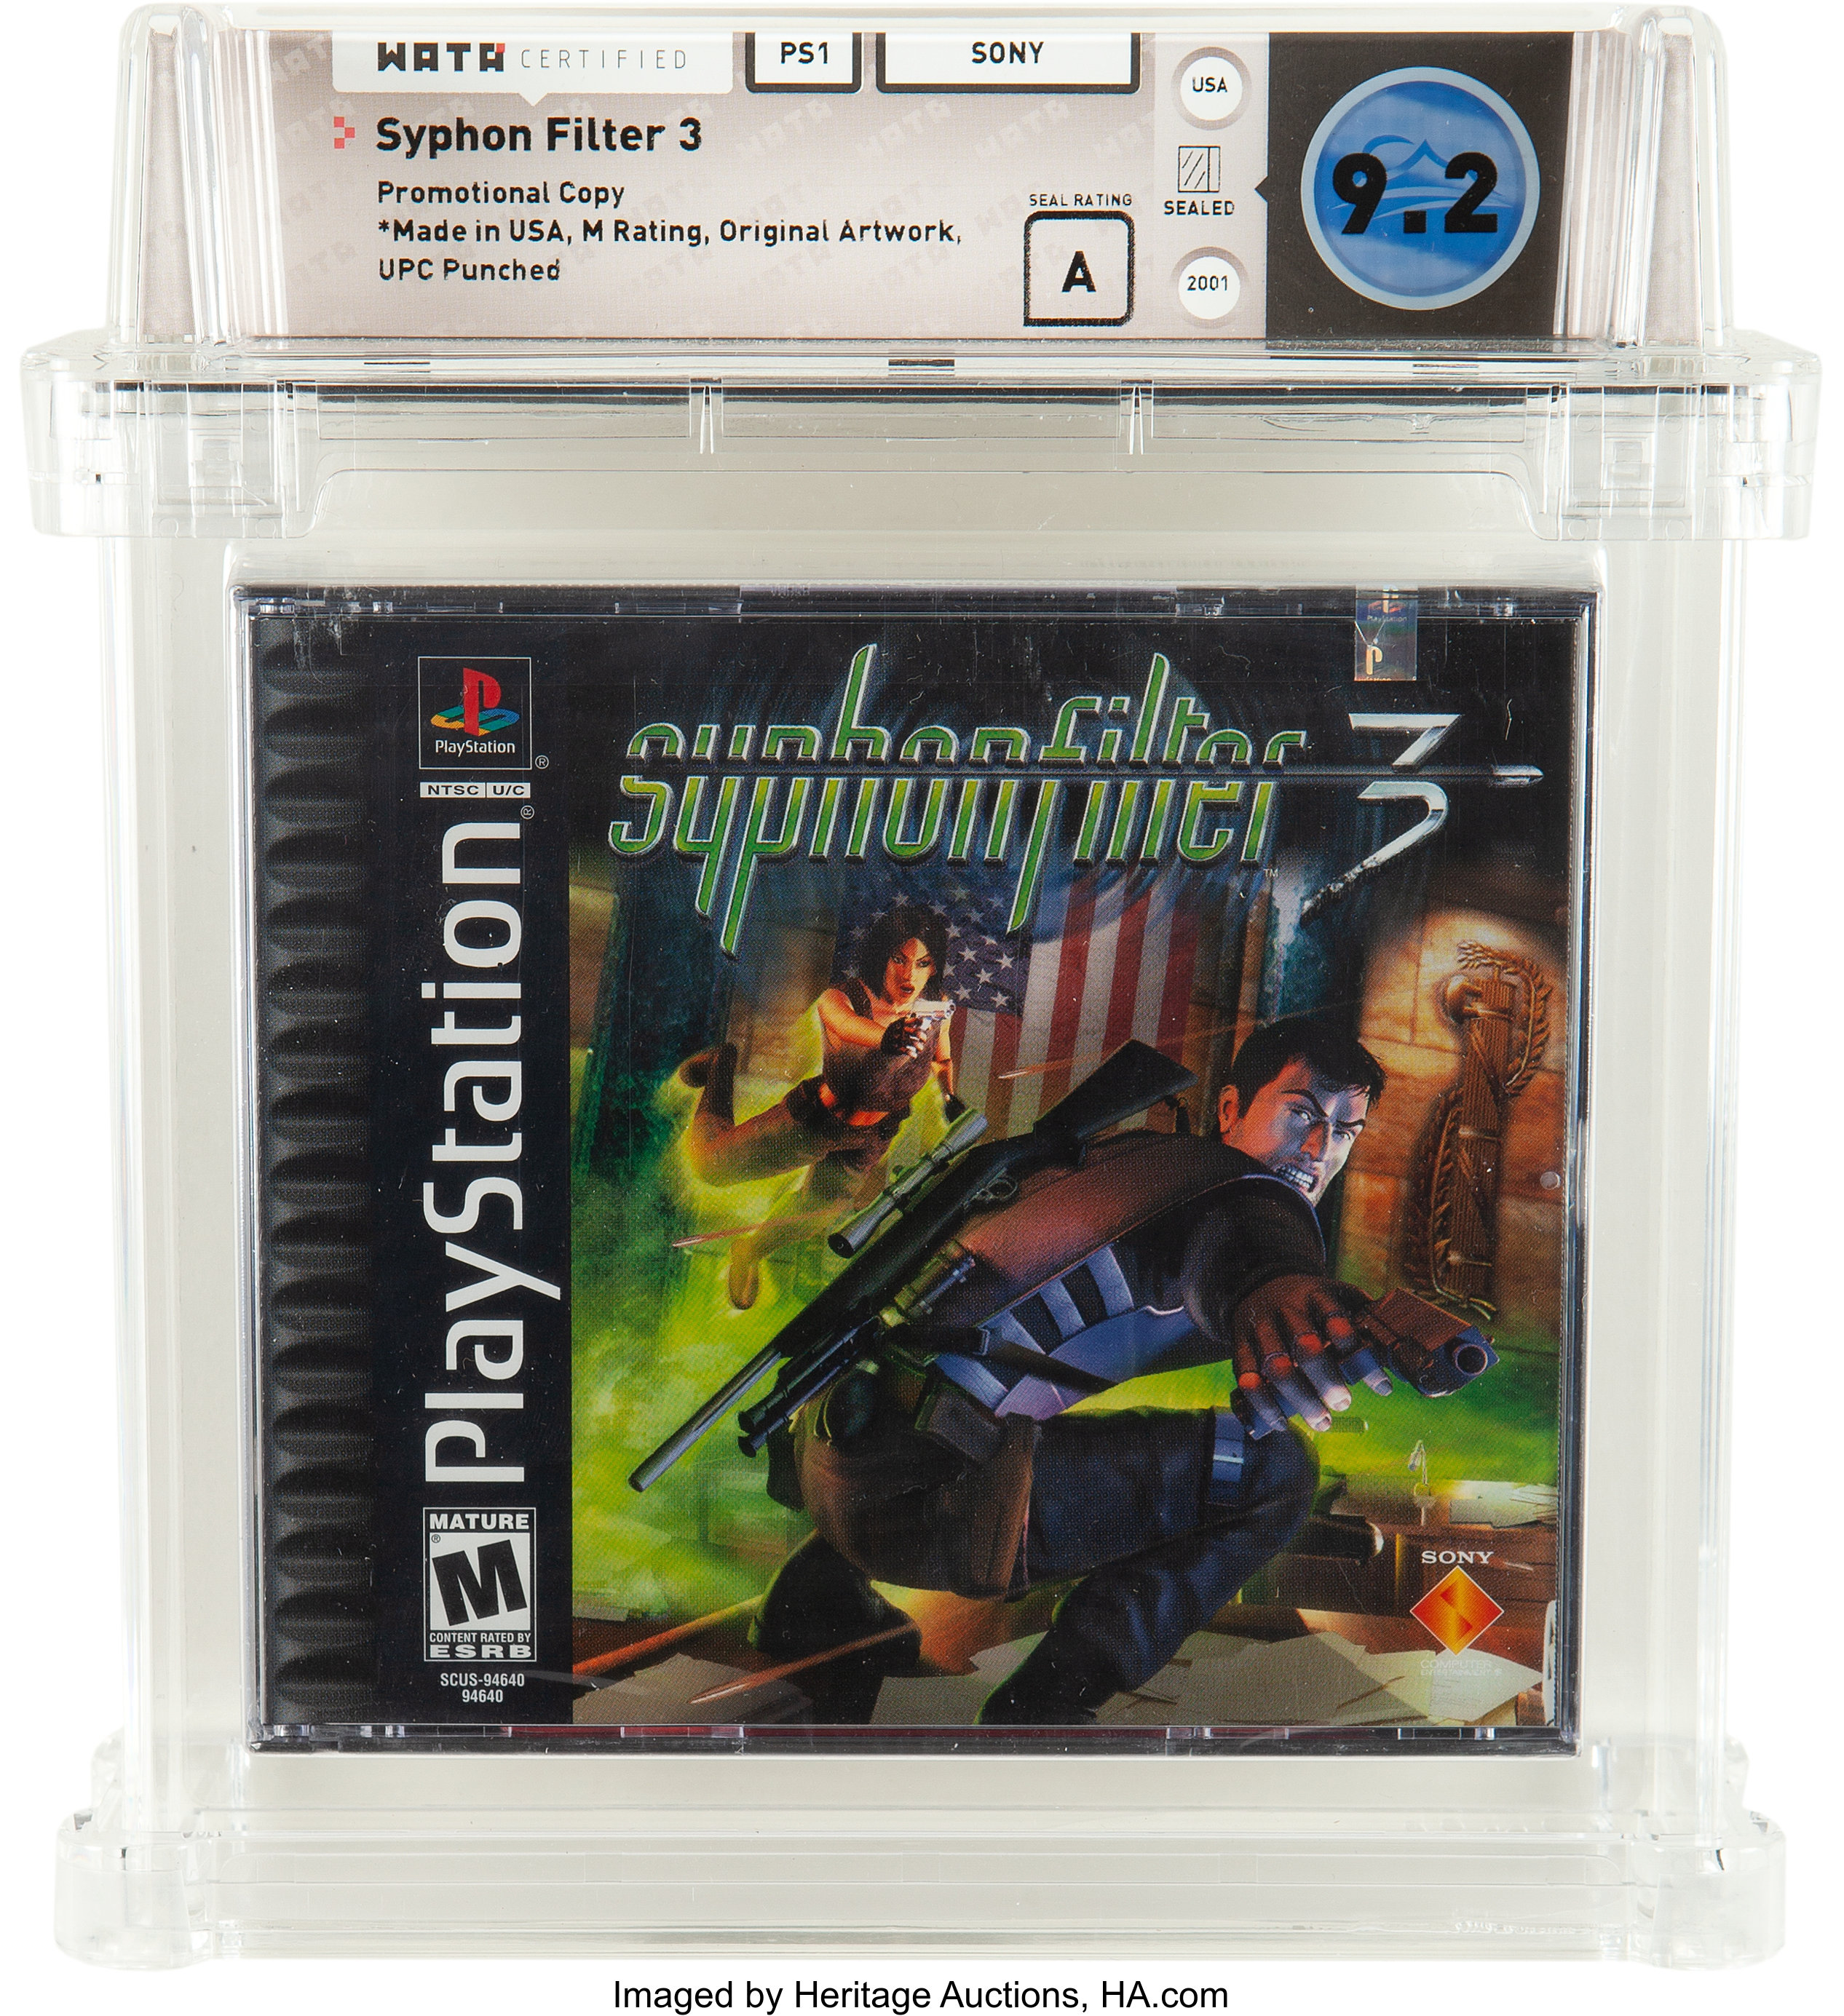 Play Syphon Filter 3 • Playstation 1 GamePhD